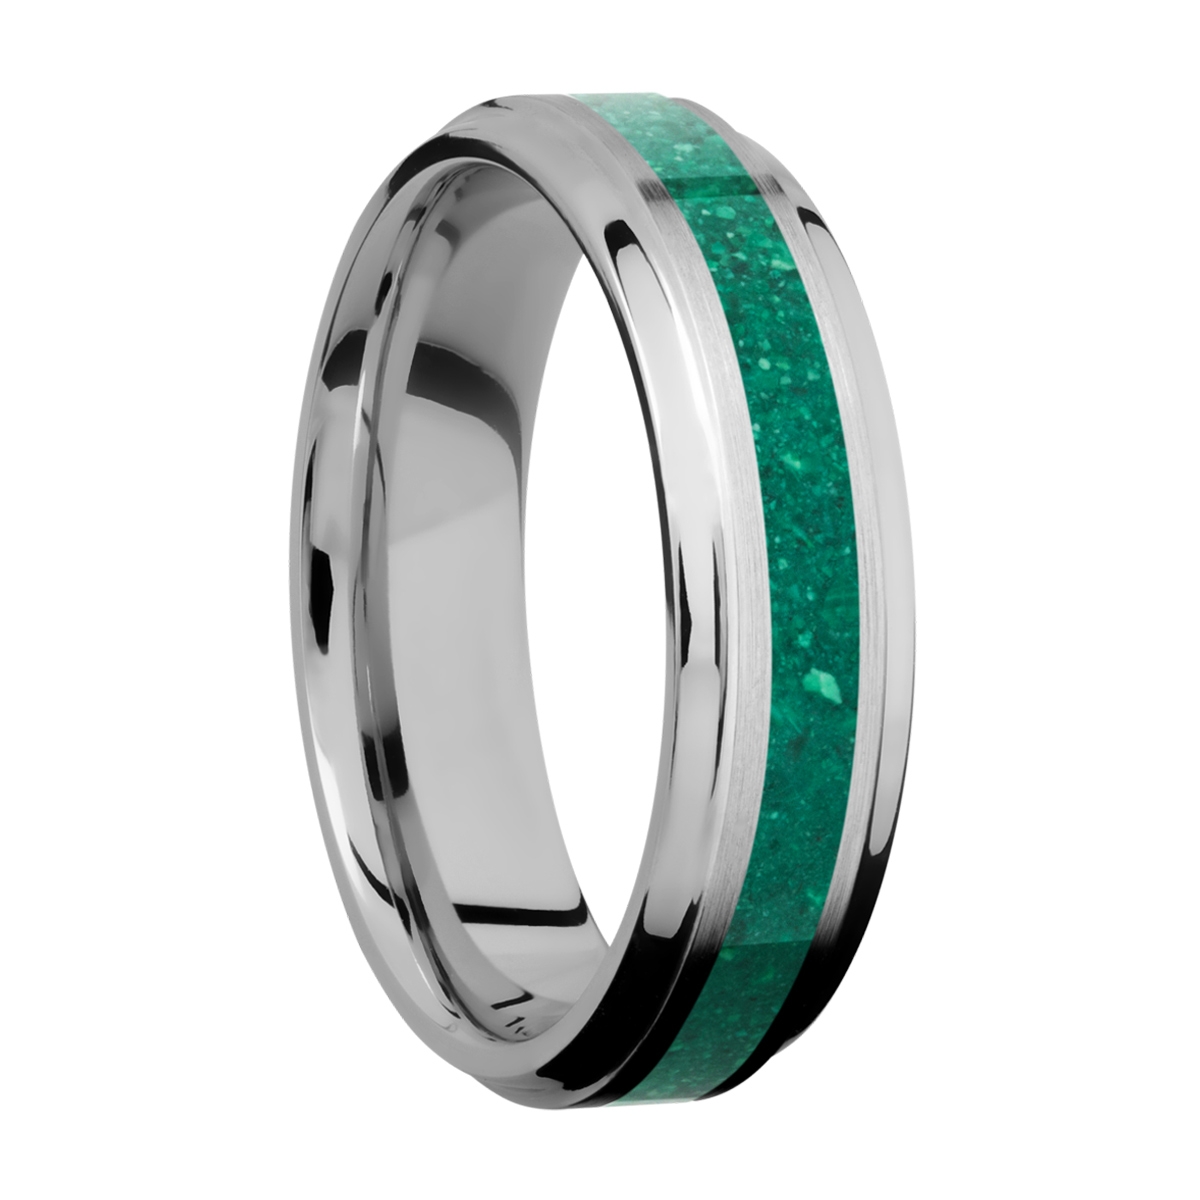 Lashbrook CC6B13(S)/MOSAIC Cobalt Chrome Wedding Ring or Band